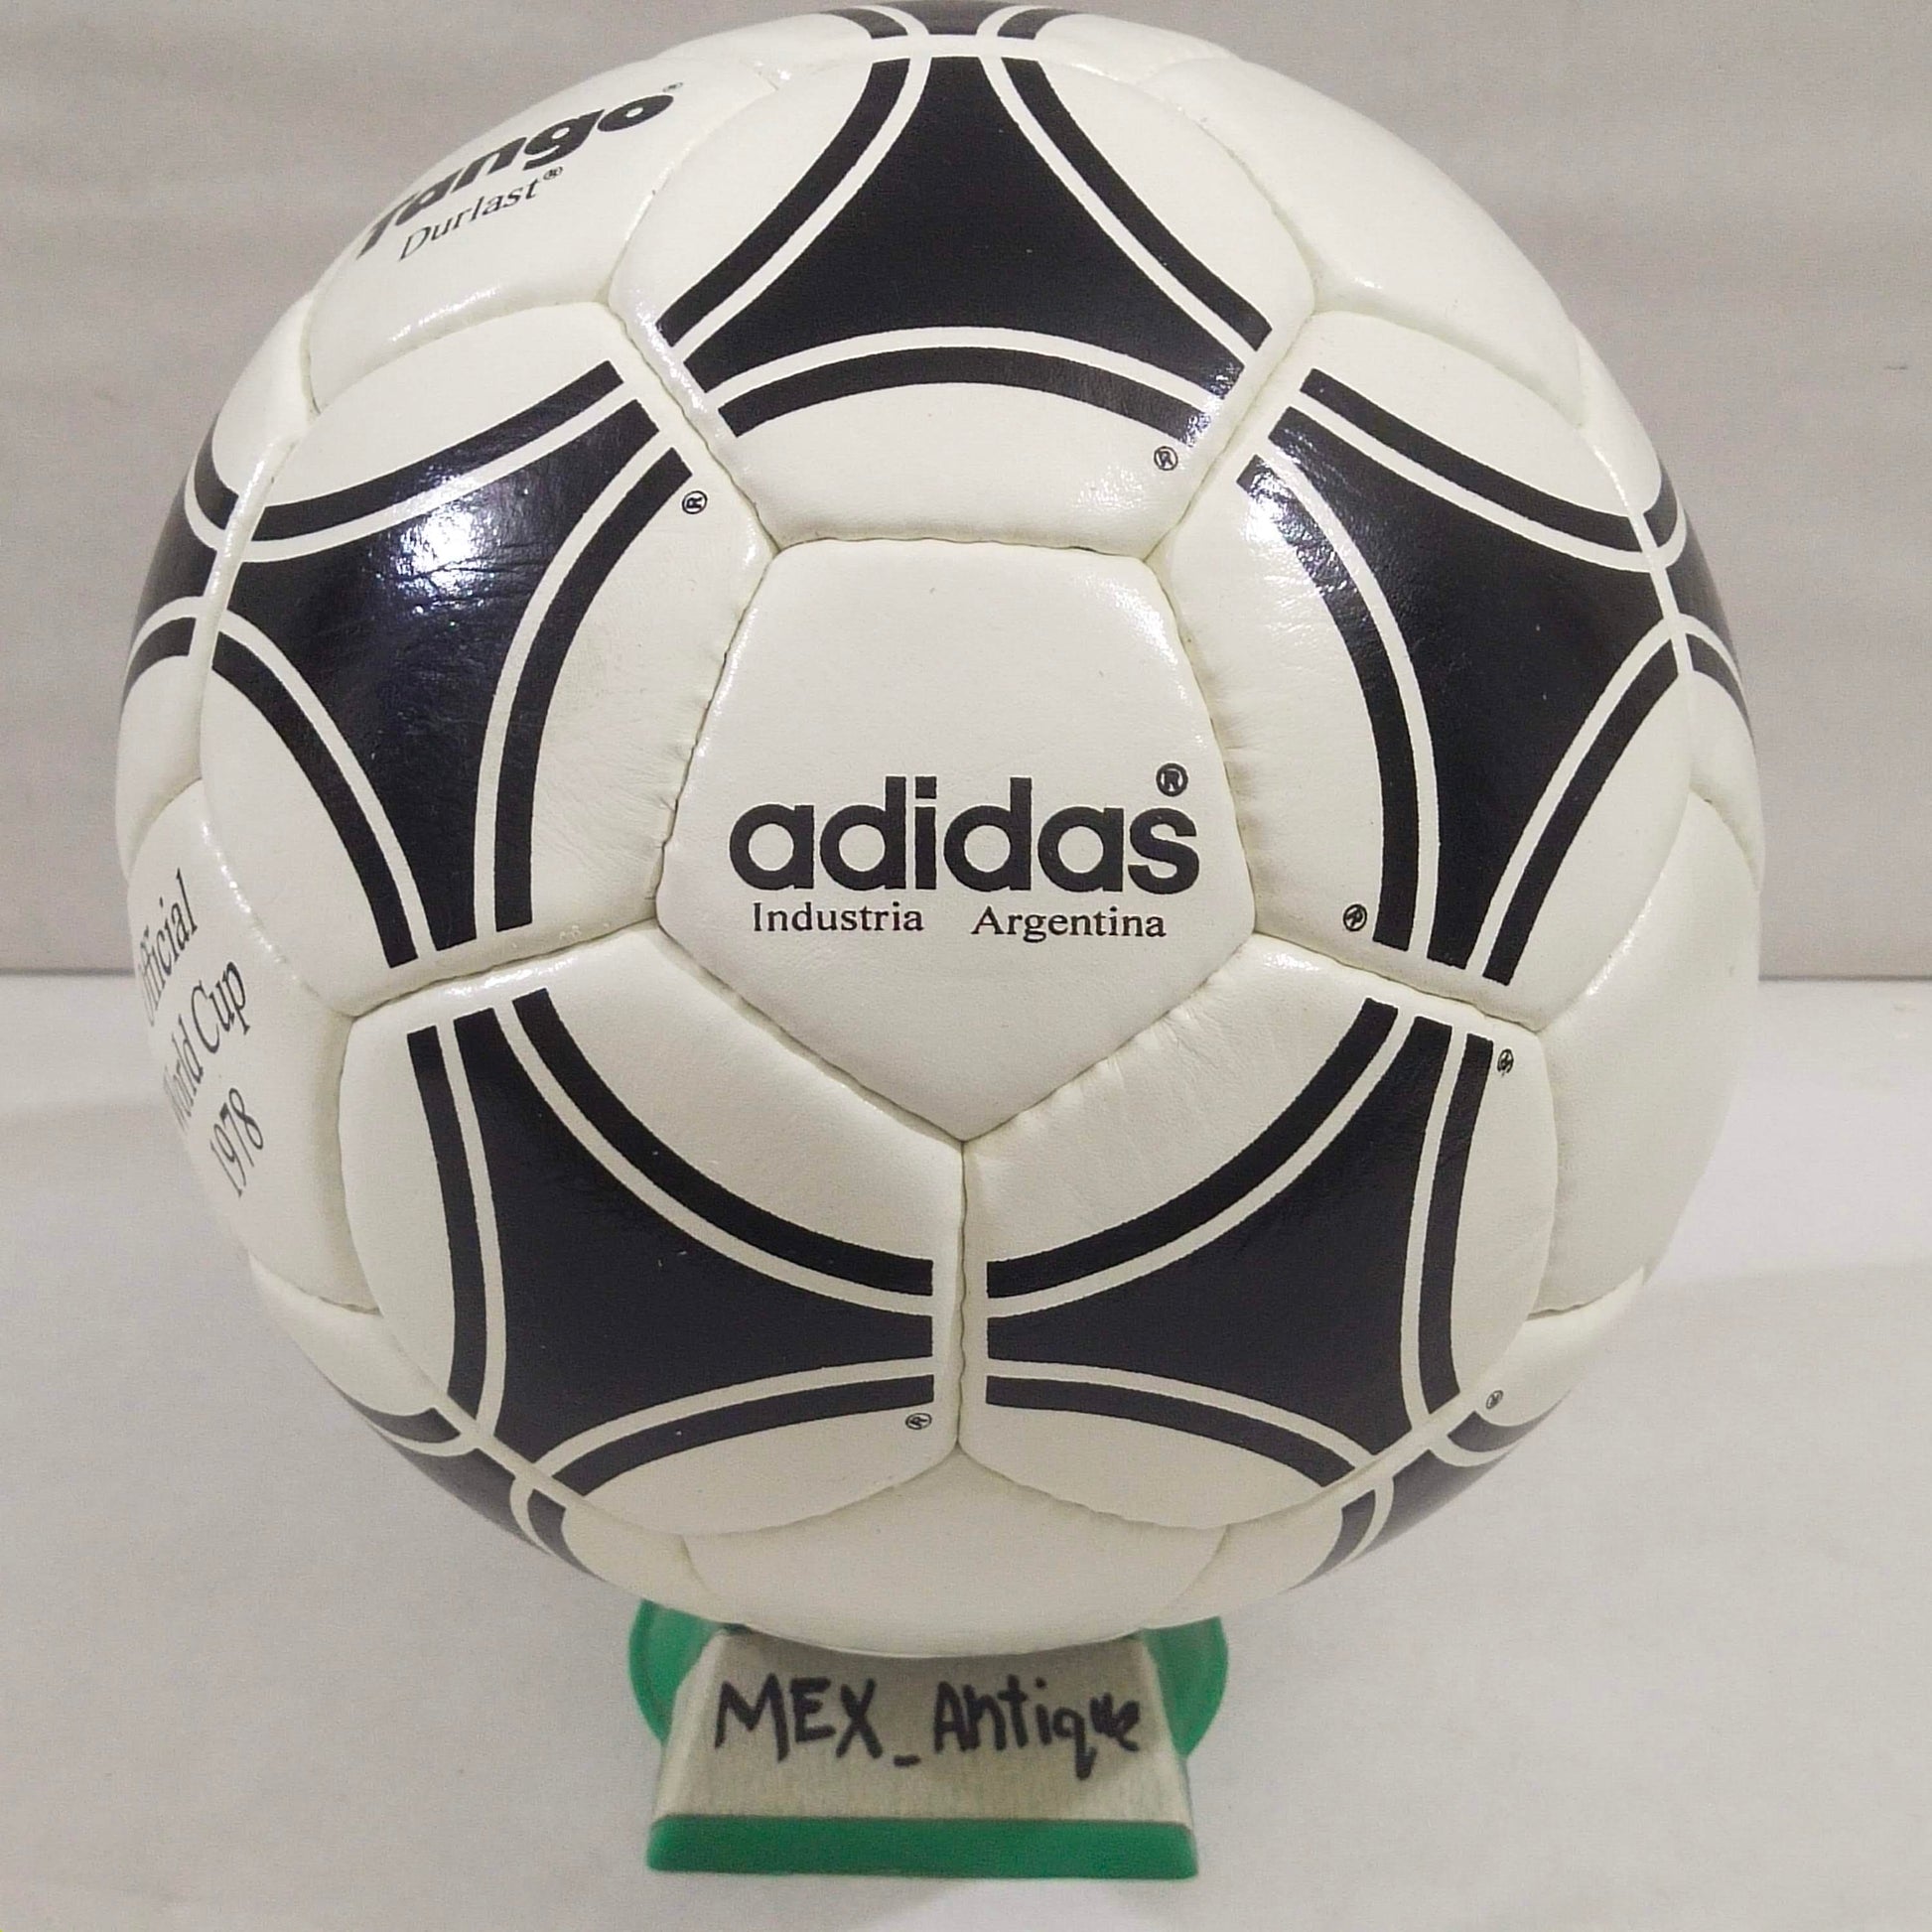 Adidas Tango Durlast | 1978 FIFA World Cup Ball | Genuine Leather SIZE 5 04